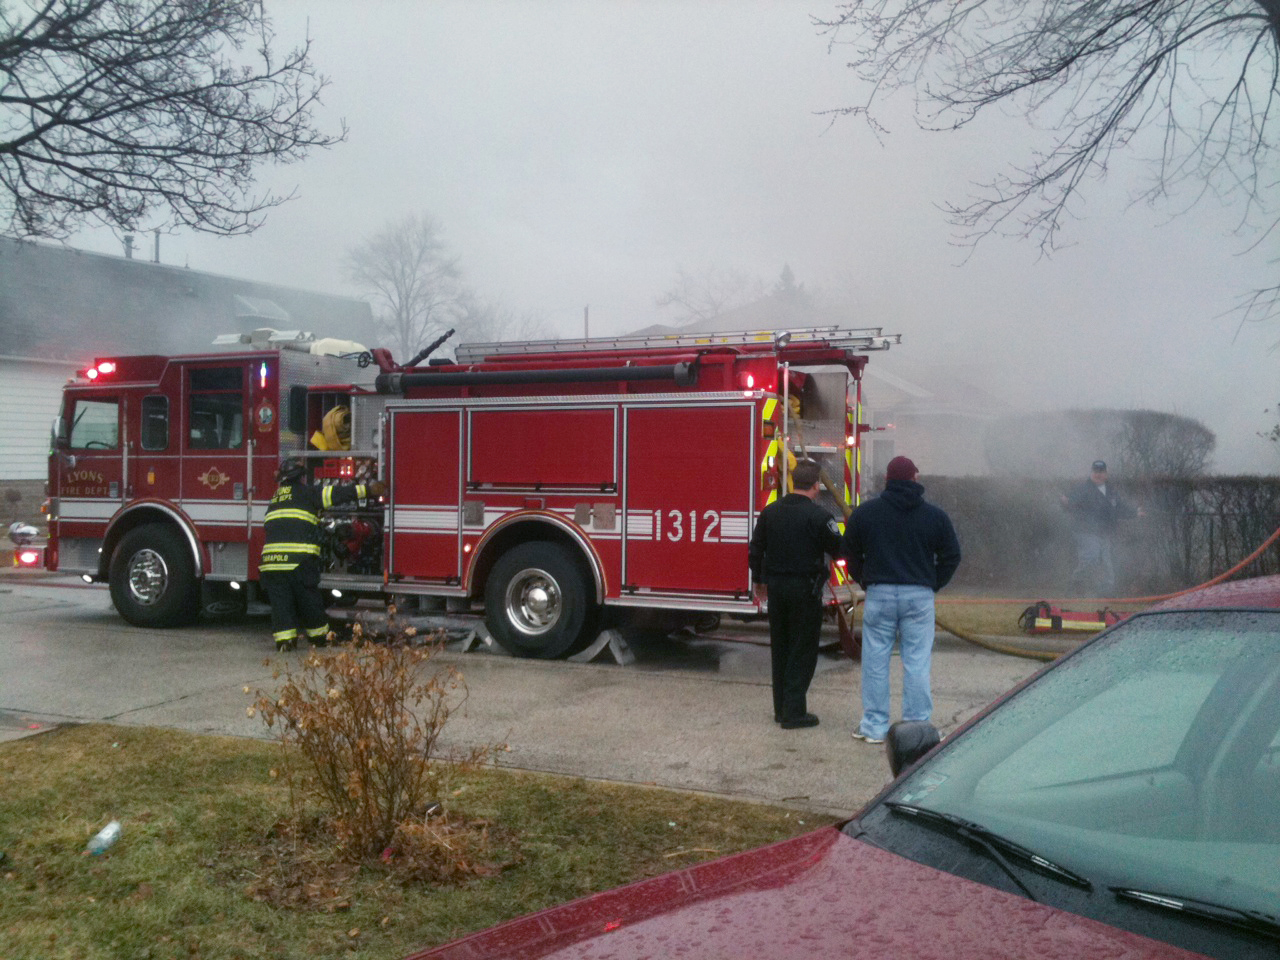 Lyons FIre Department house fire on Konrod Feb 20, 2011